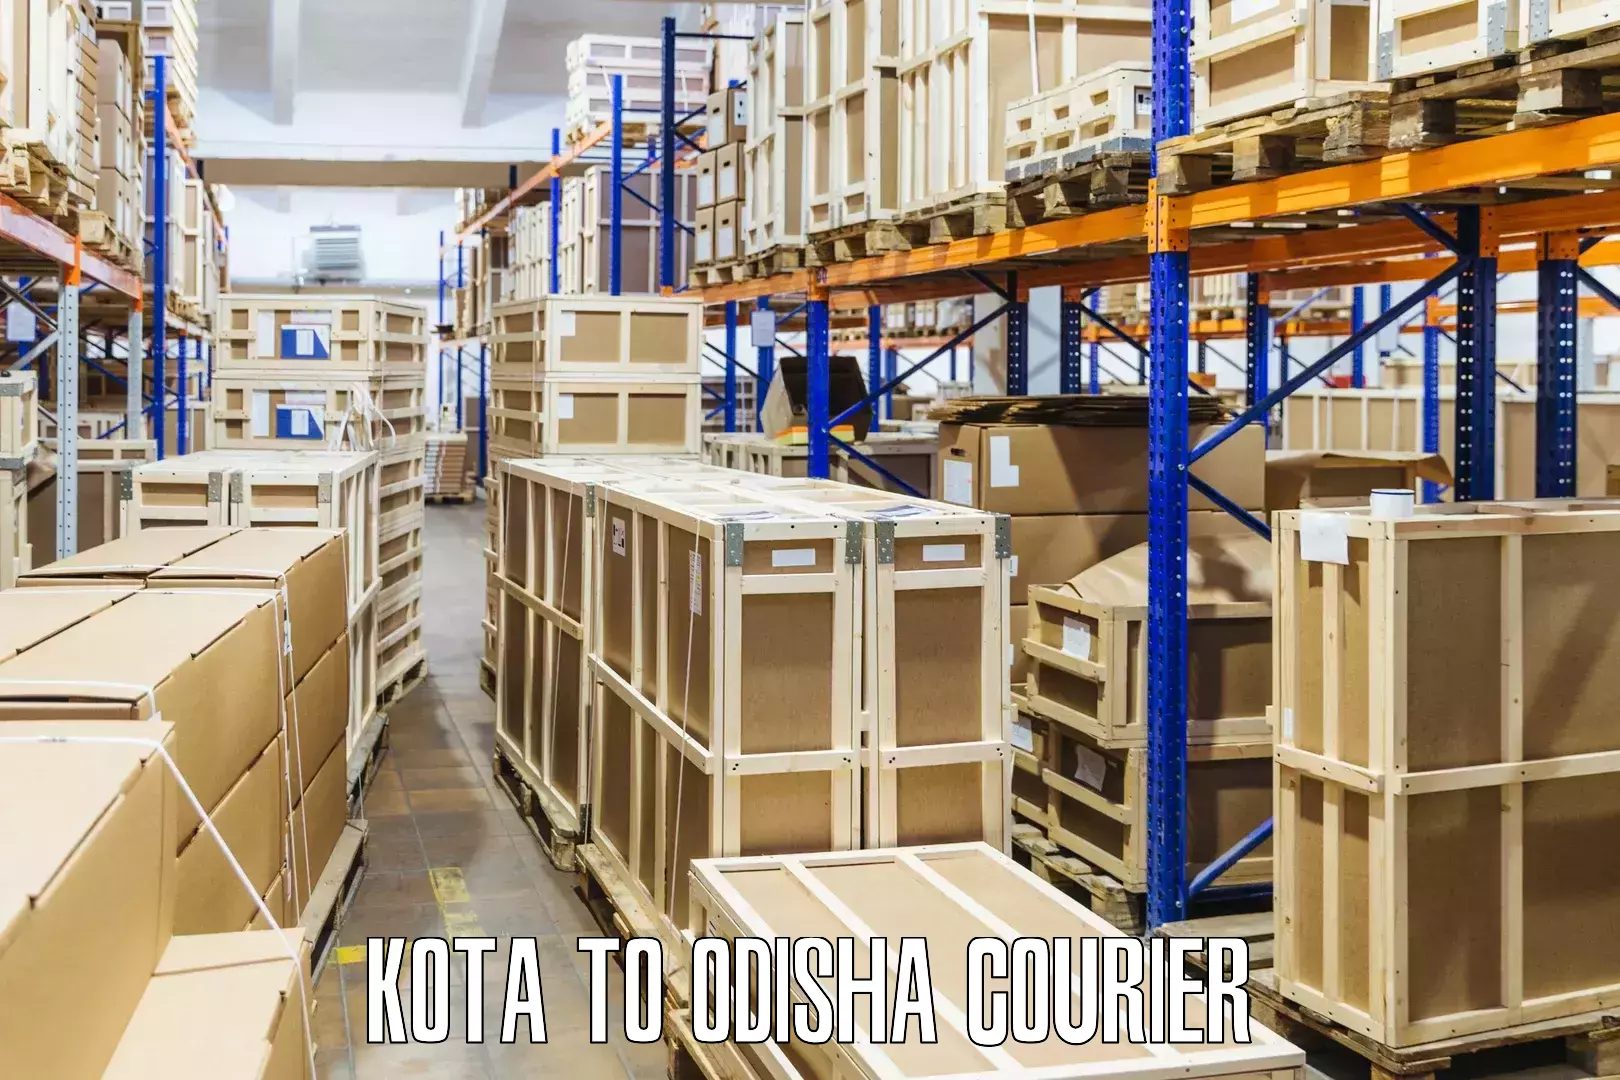 On-demand delivery Kota to Odisha